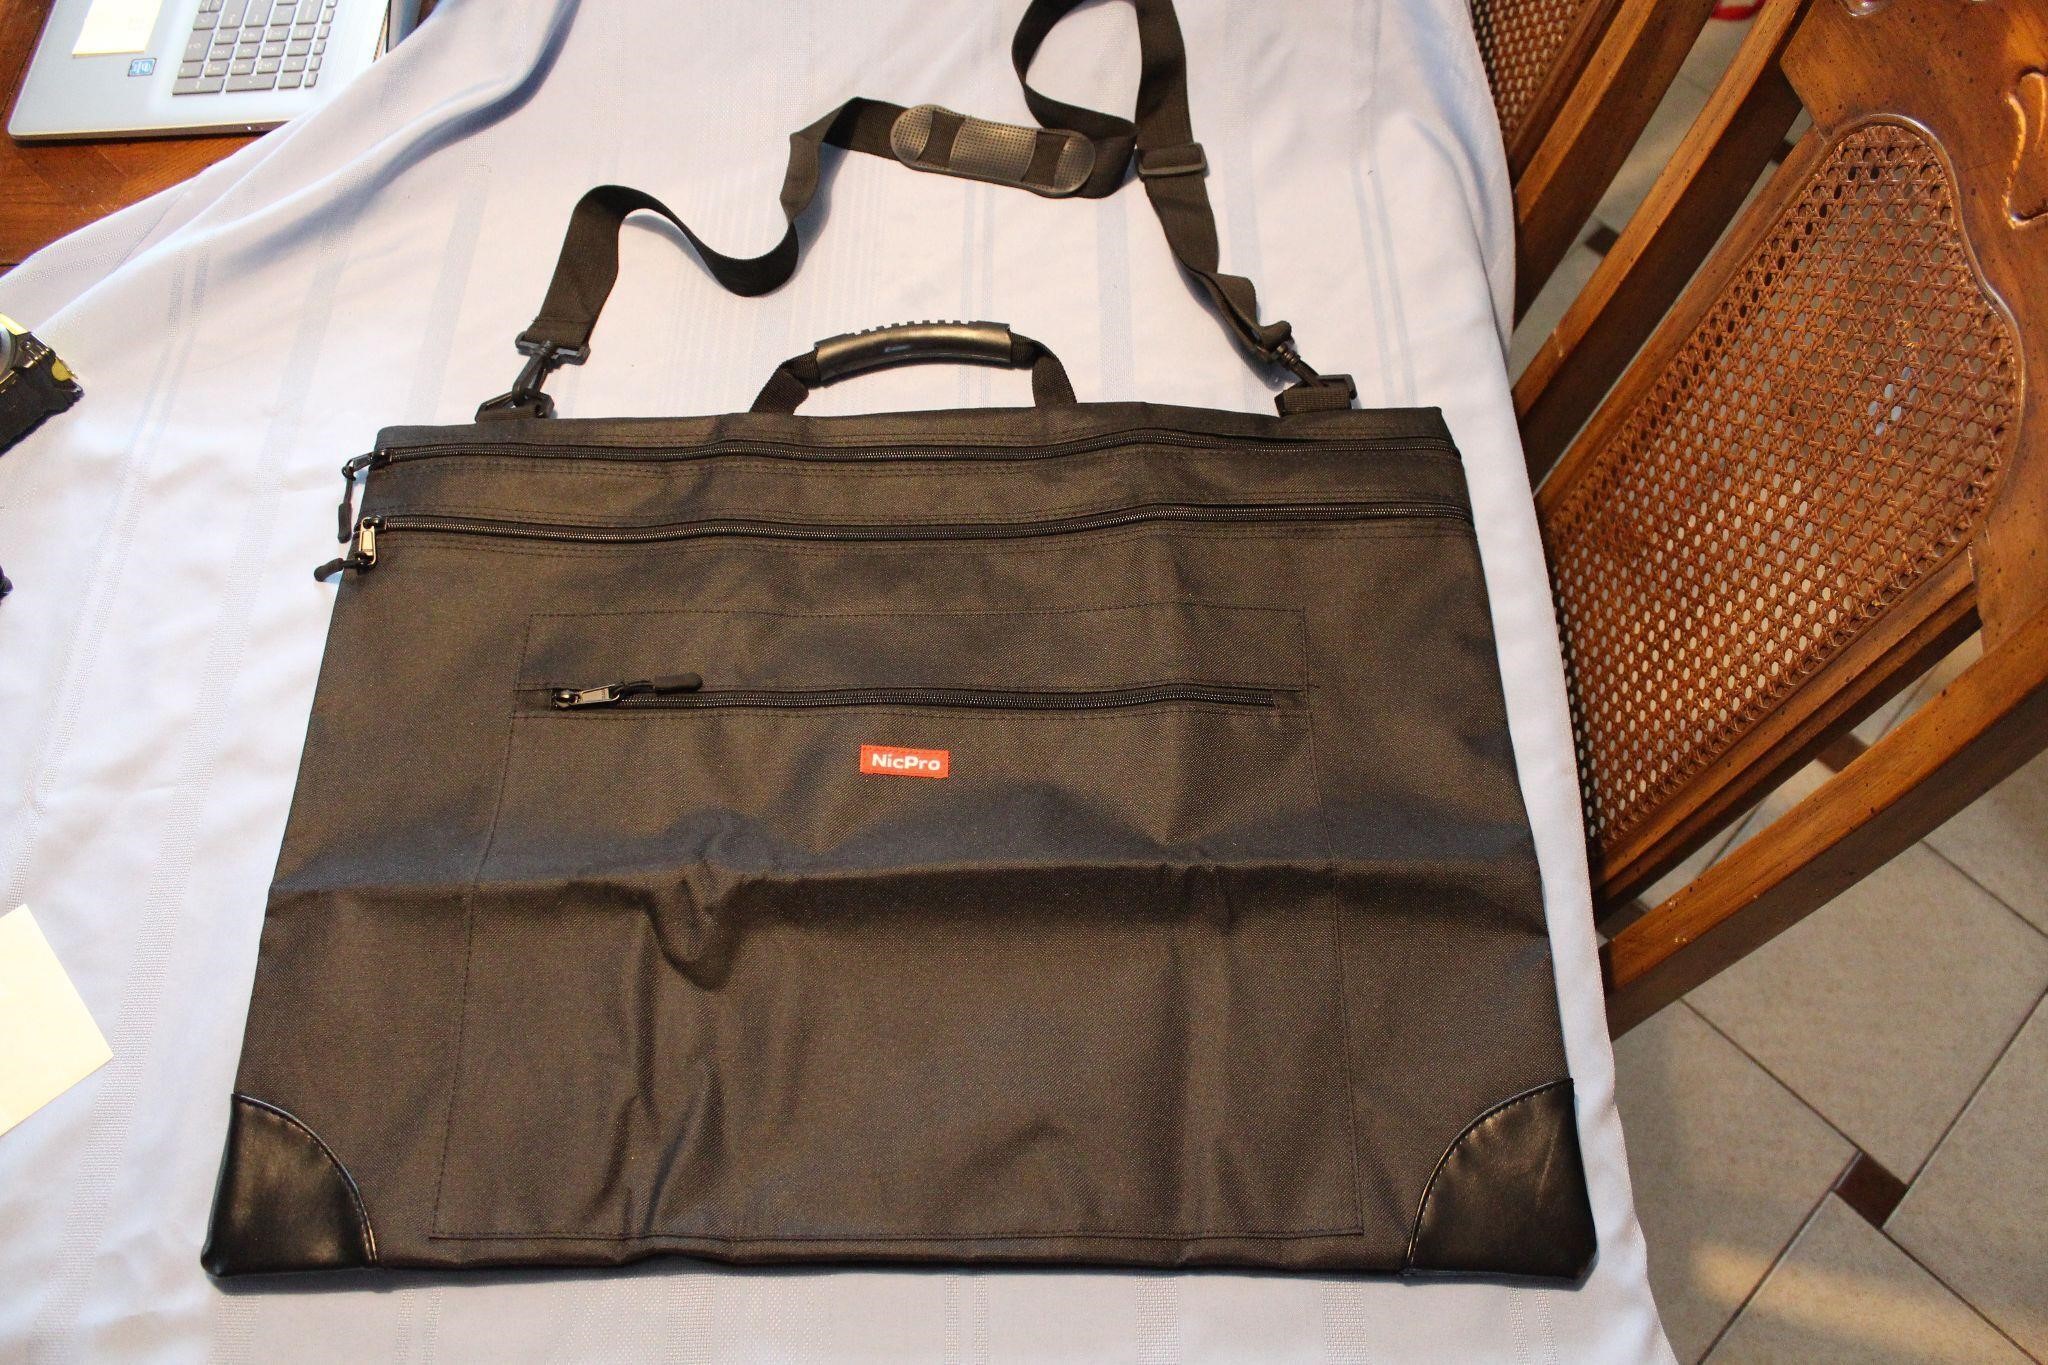 NicPro Carry Bag - Black